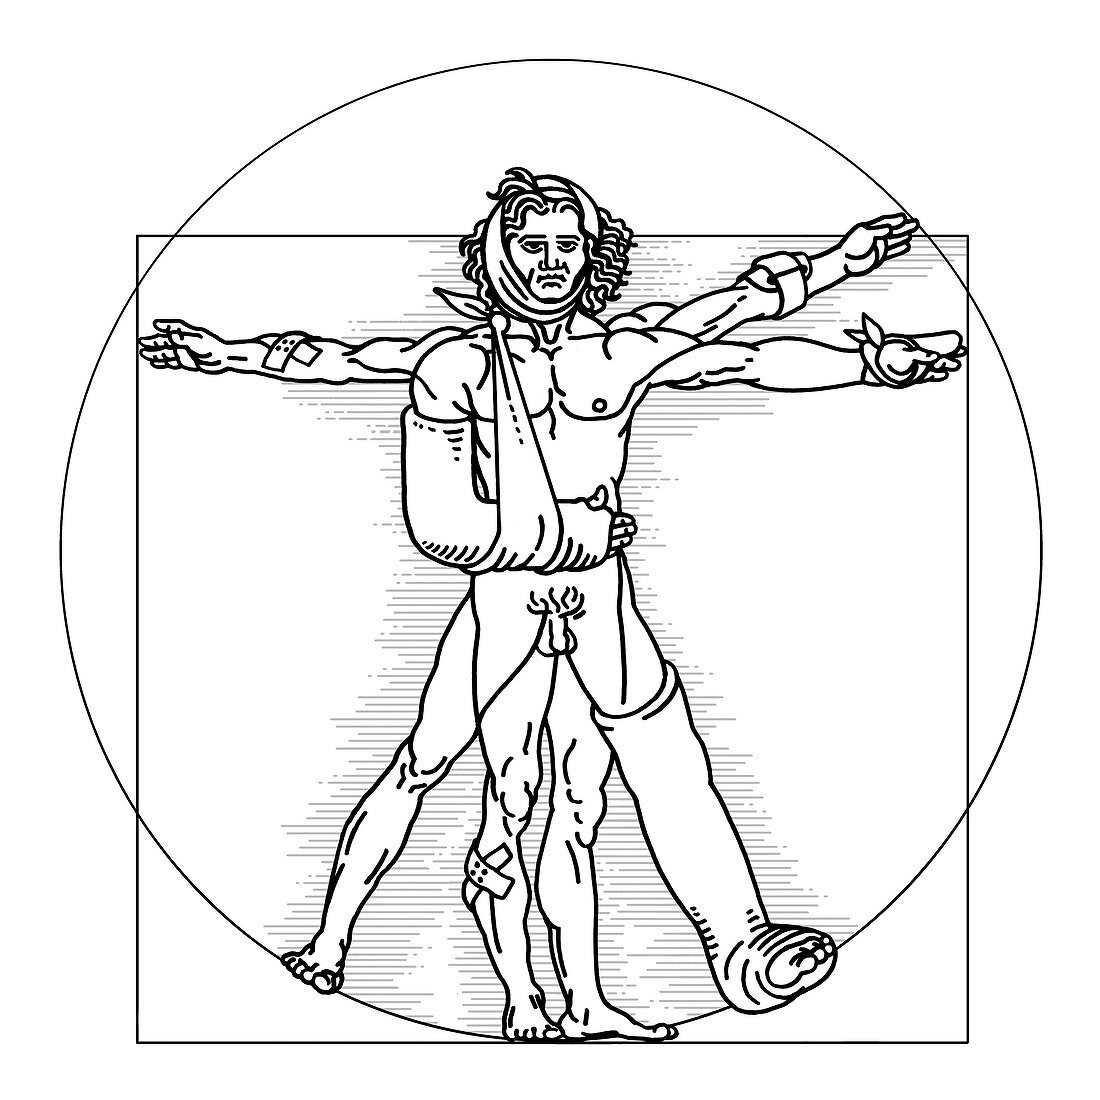 Injured Vitruvian Man,conceptual image